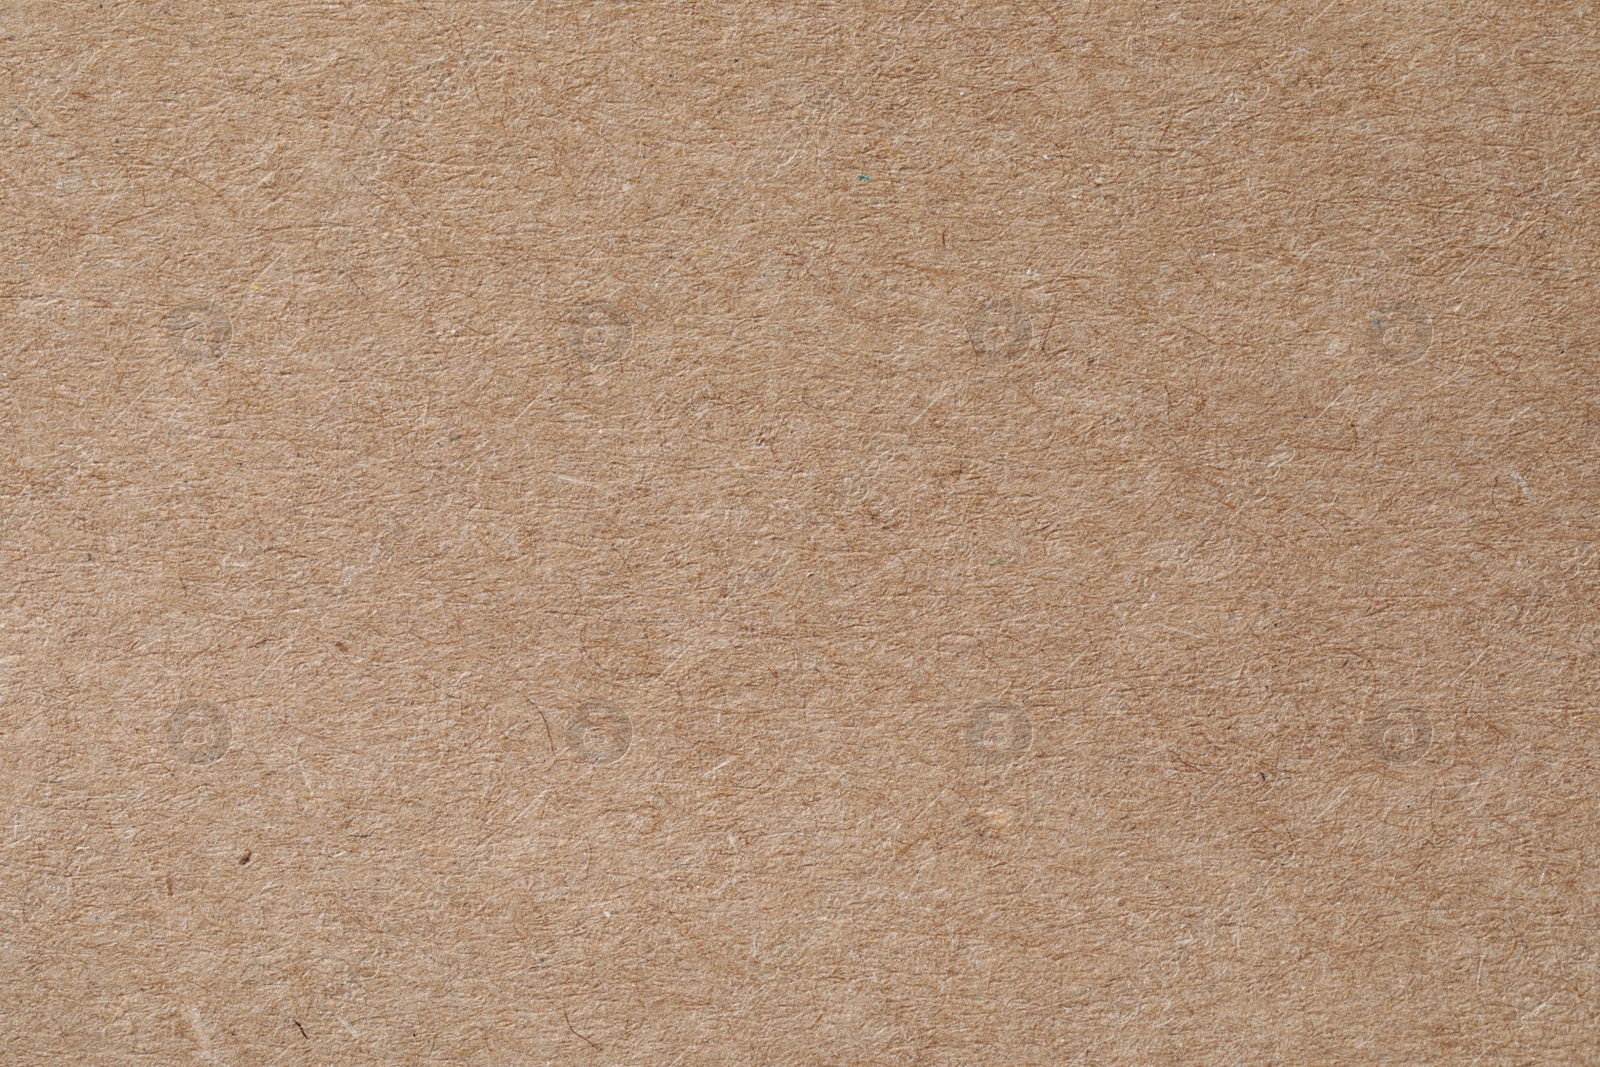 Photo of Texture of kraft paper sheet as background, closeup